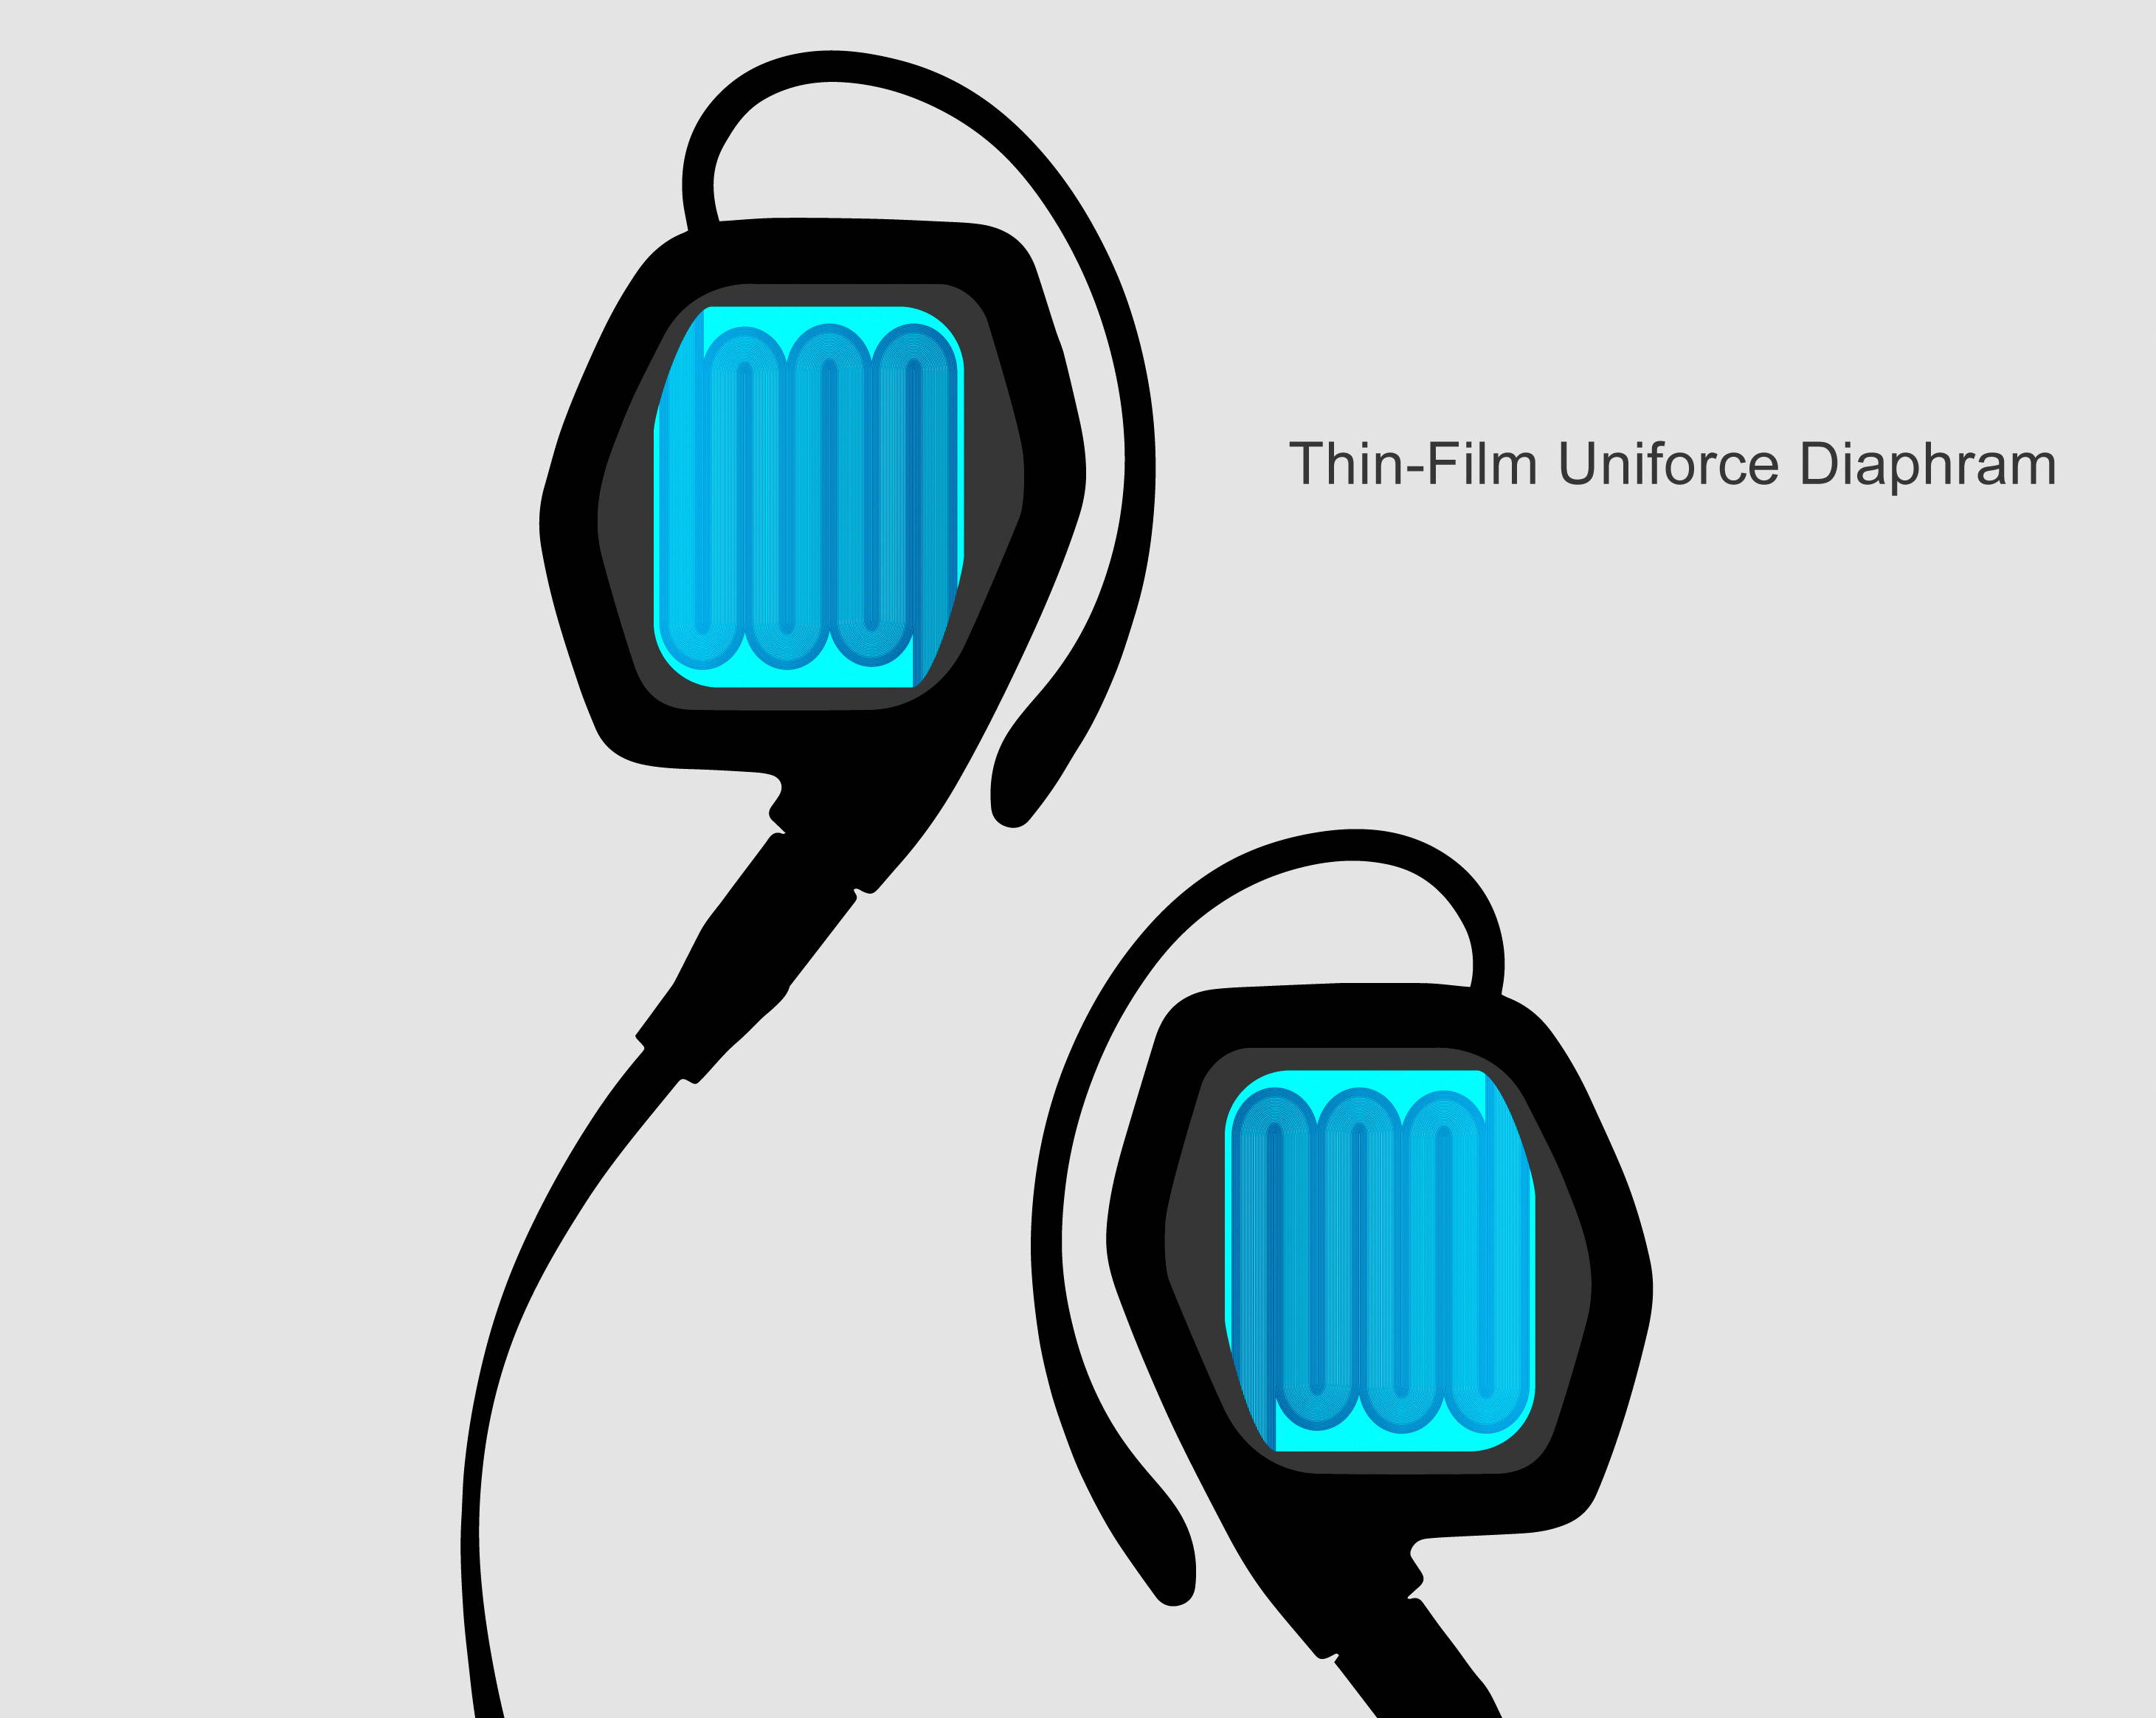 Thin-Film Uniforce Diaphragm logo